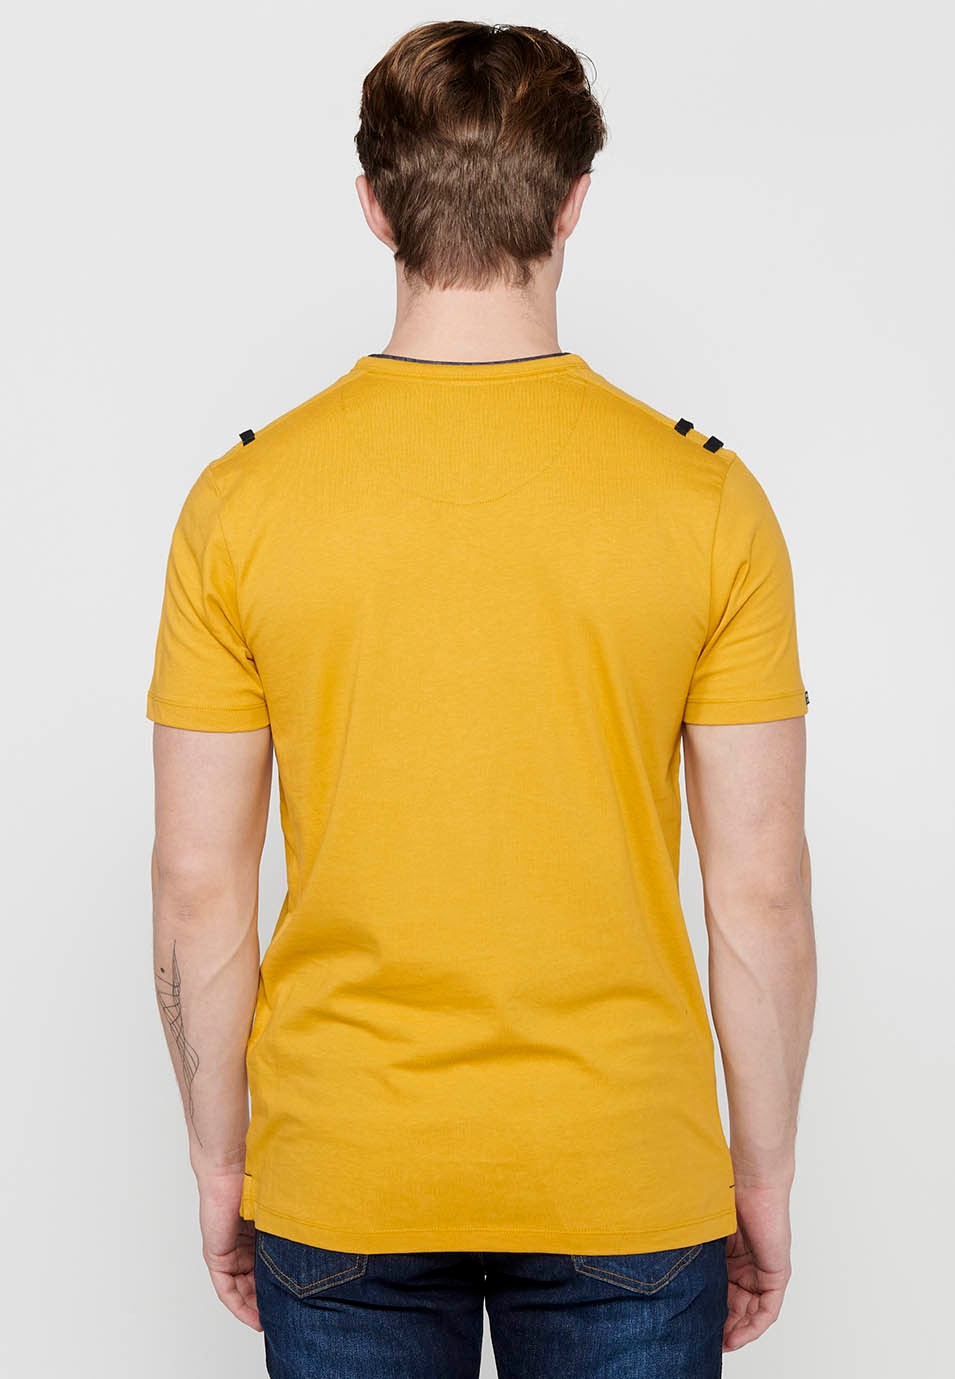 Camiseta de manga corta de Algodón con Cuello redondo con abertura abotonada de Color Amarillo para Hombre 7